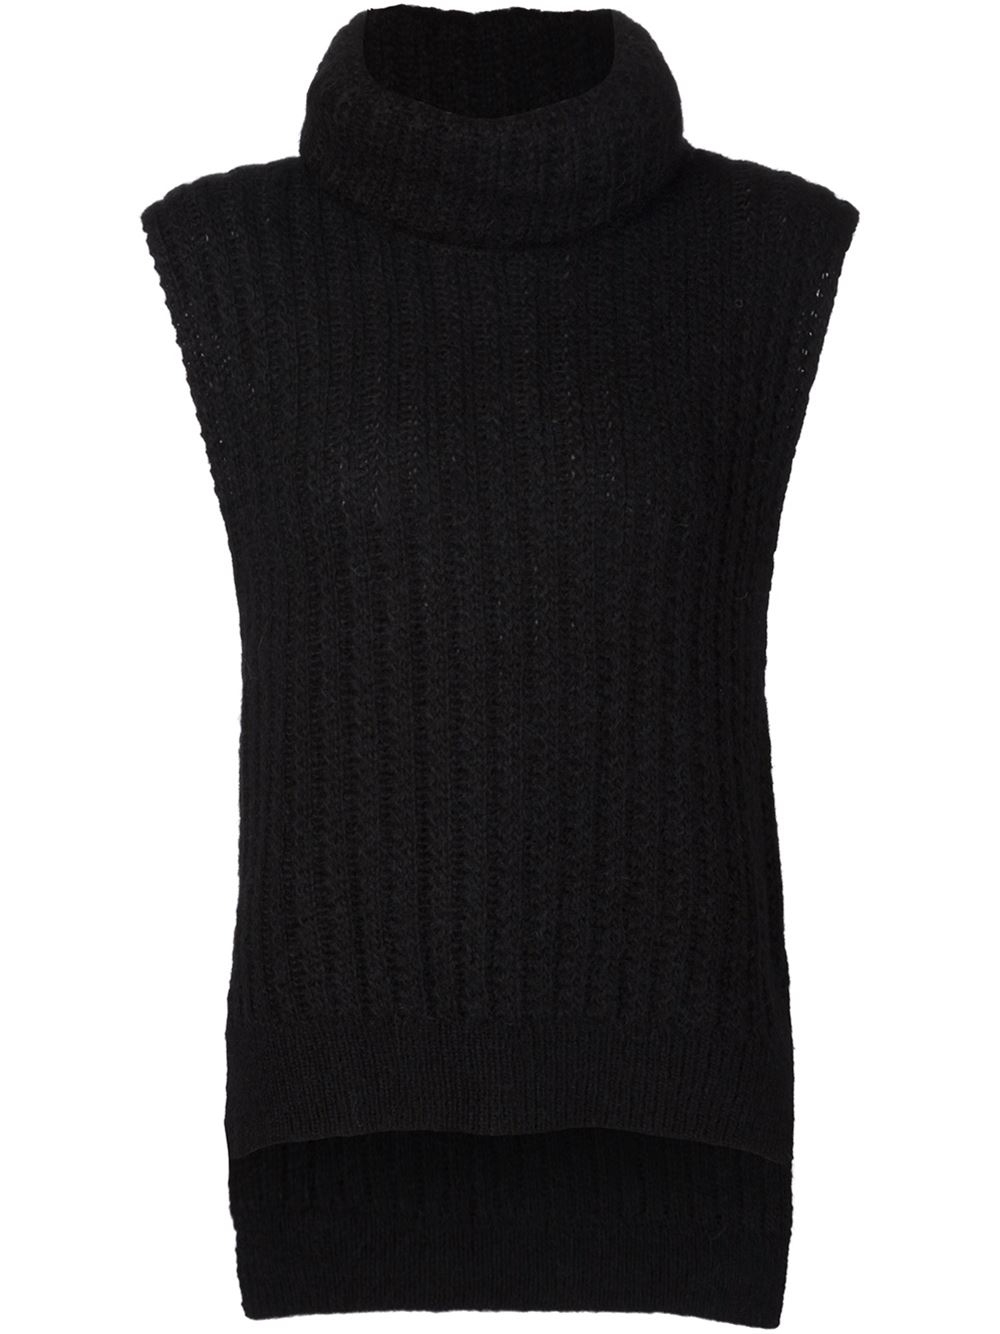 Lyst - 3.1 Phillip Lim Sleeveless Turtleneck Sweater in Black